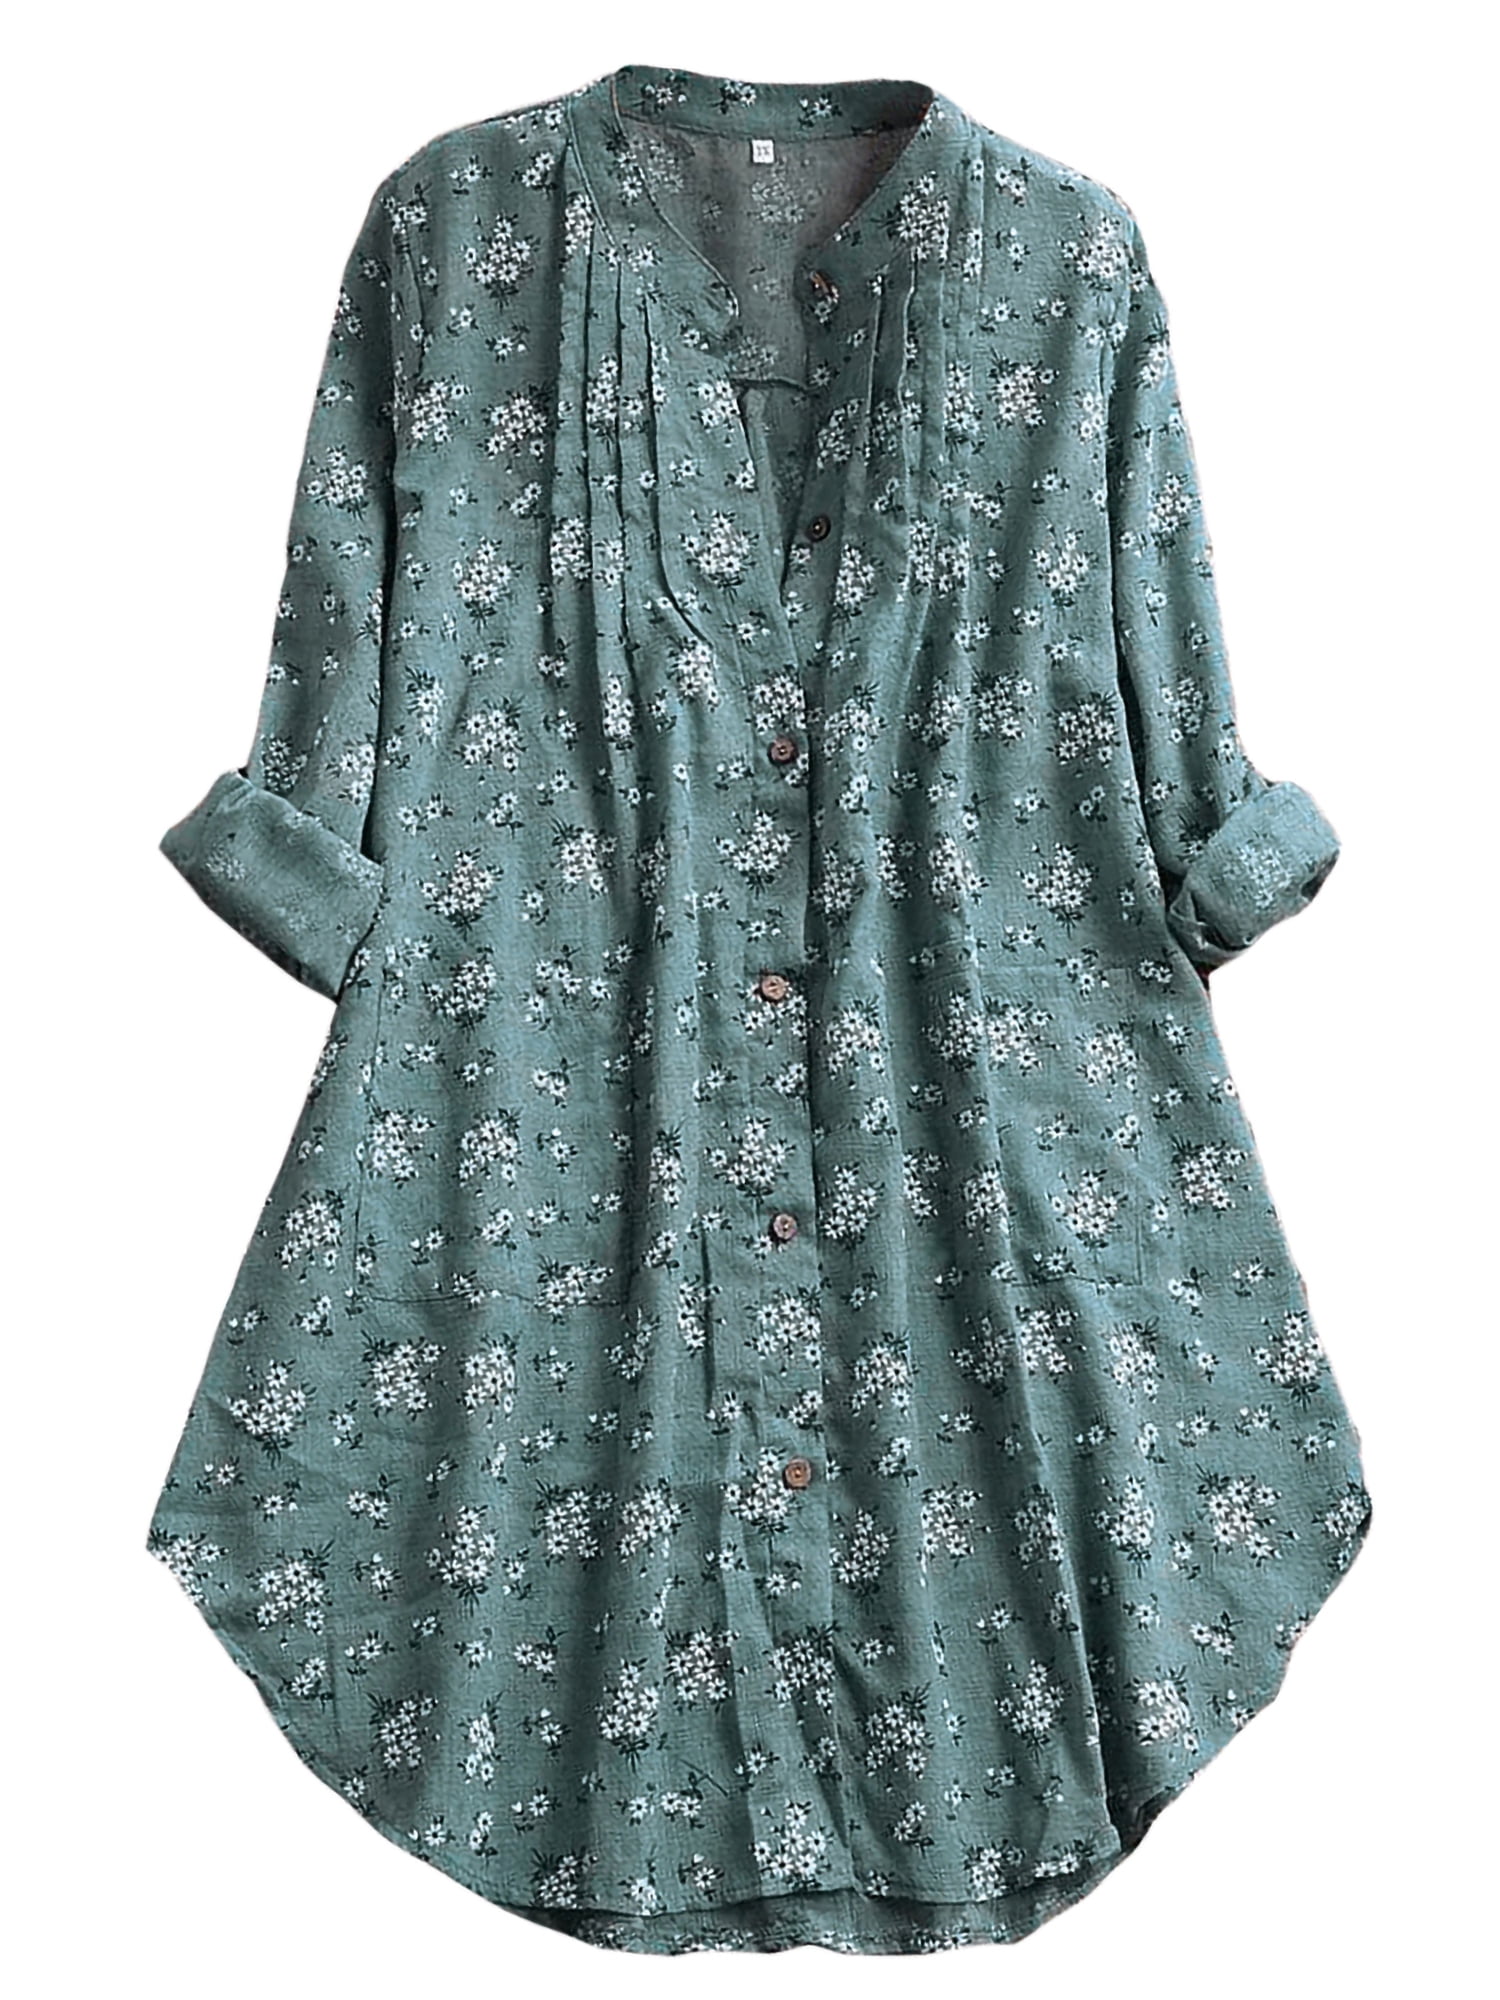 XL, Green Swing Blouse Plus Size for Women Fashion Summer Print T-Shirt Irregular Hem Loose Dress Top